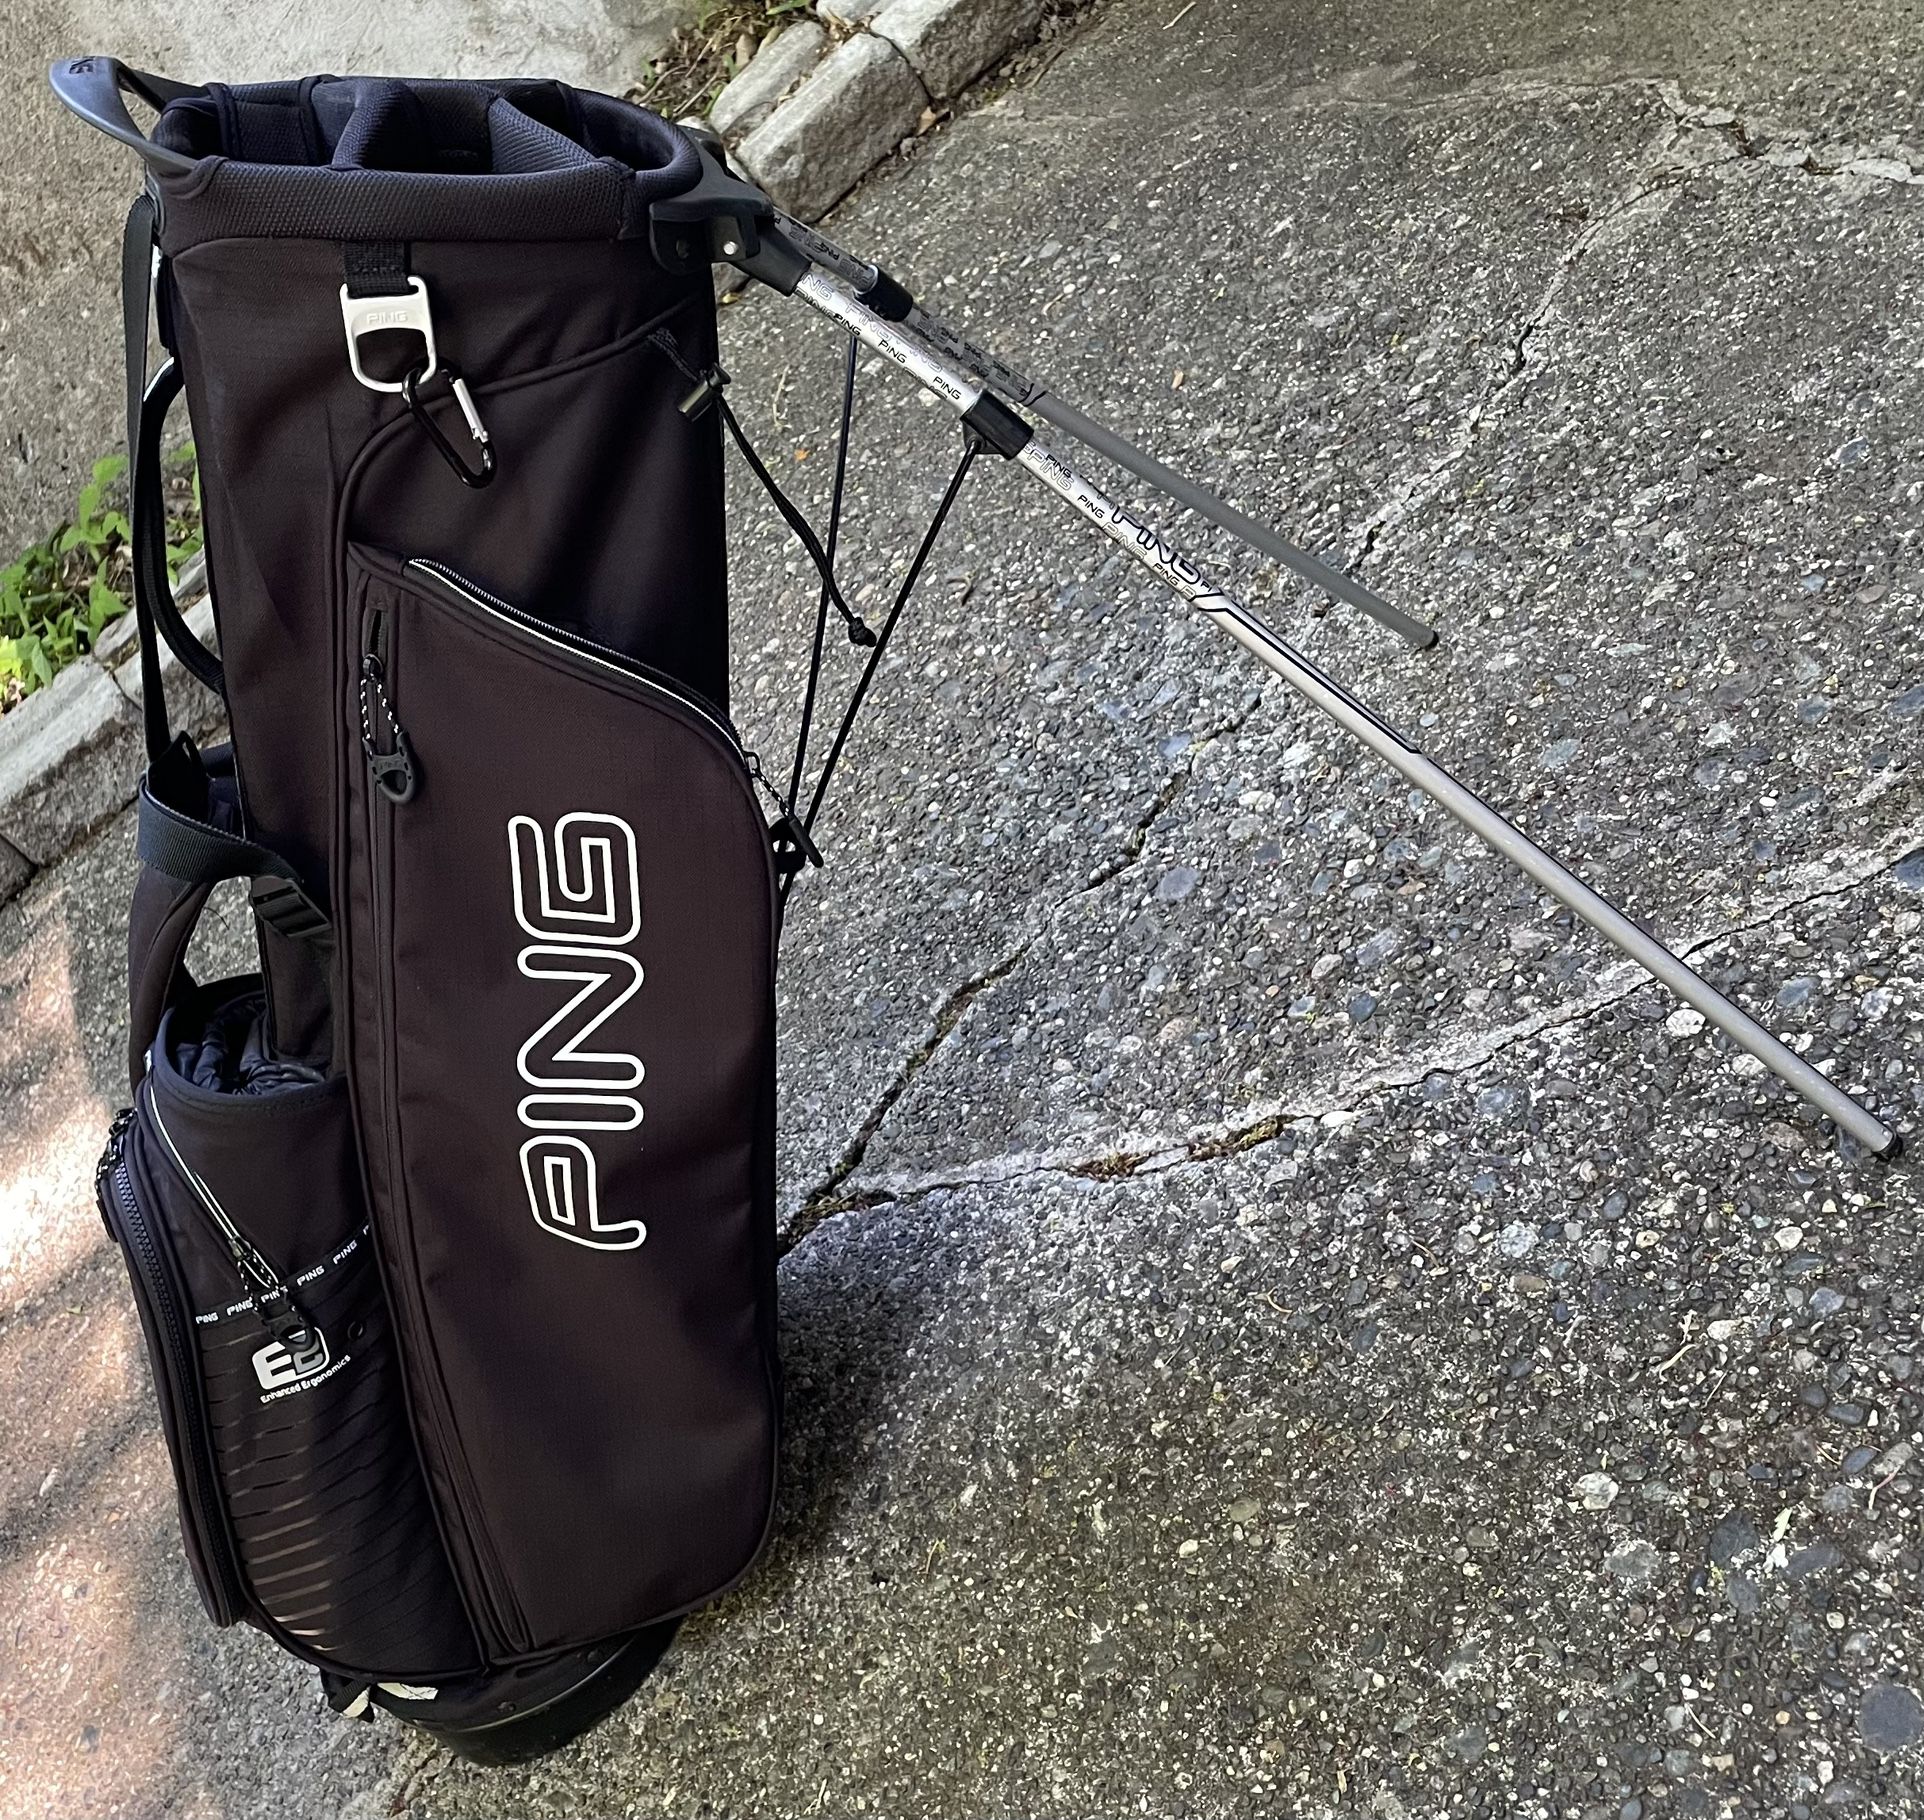 Ping Golf Bag - Pending